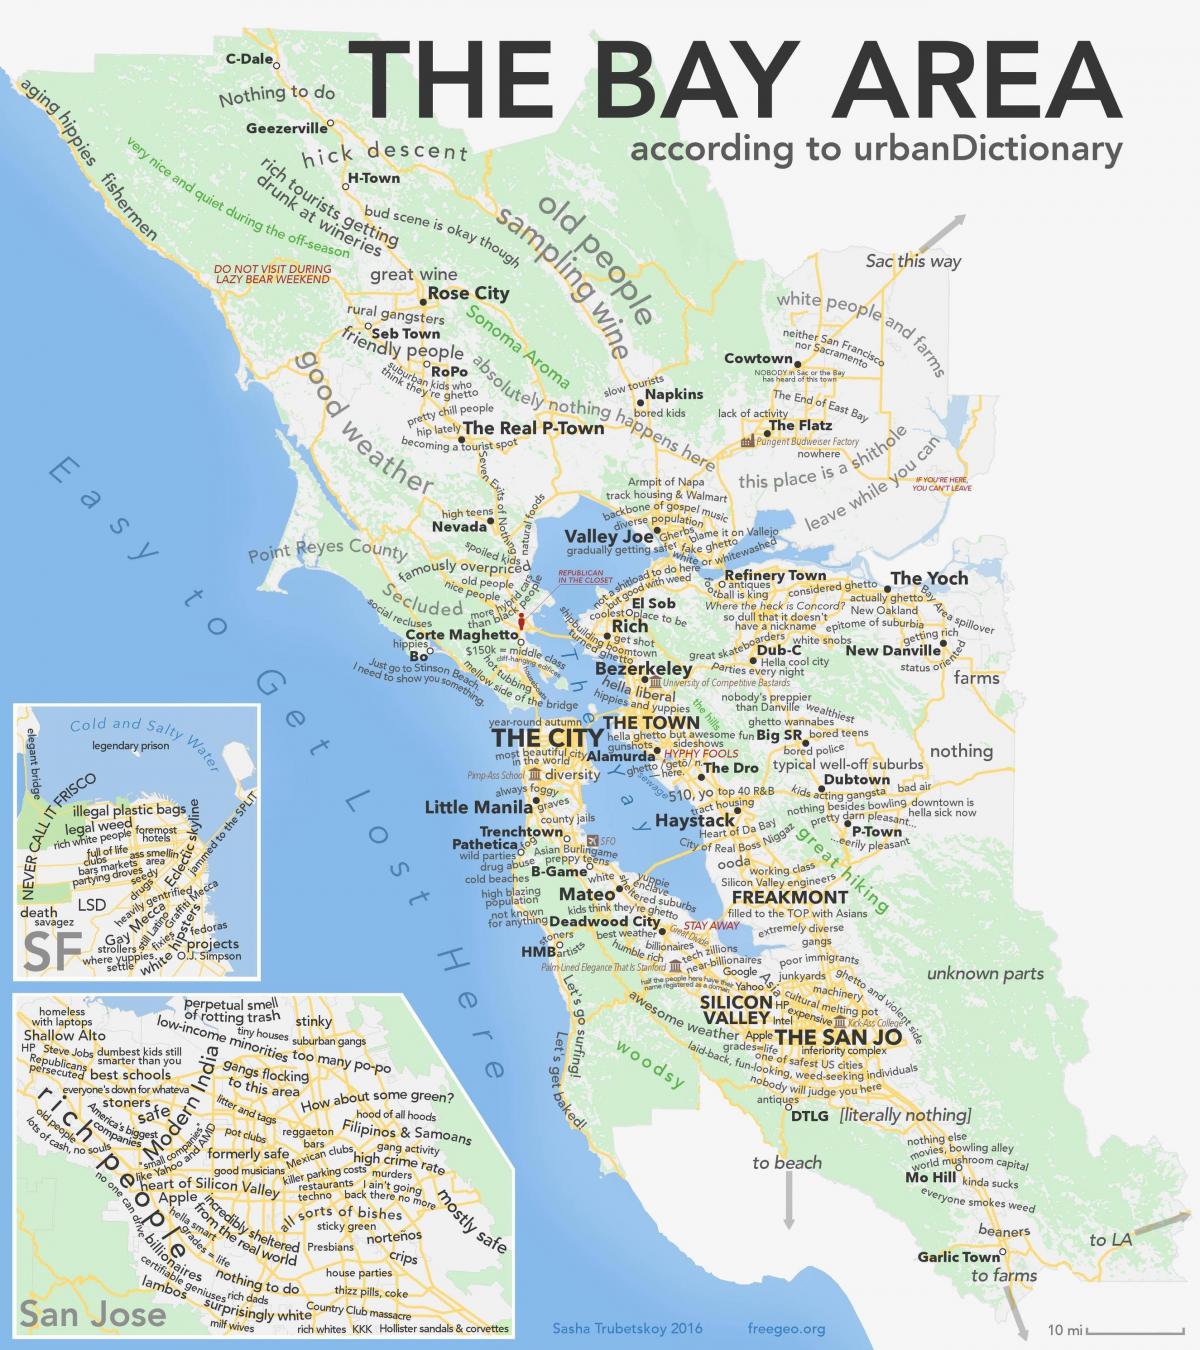 San Francisco kartta-alueet